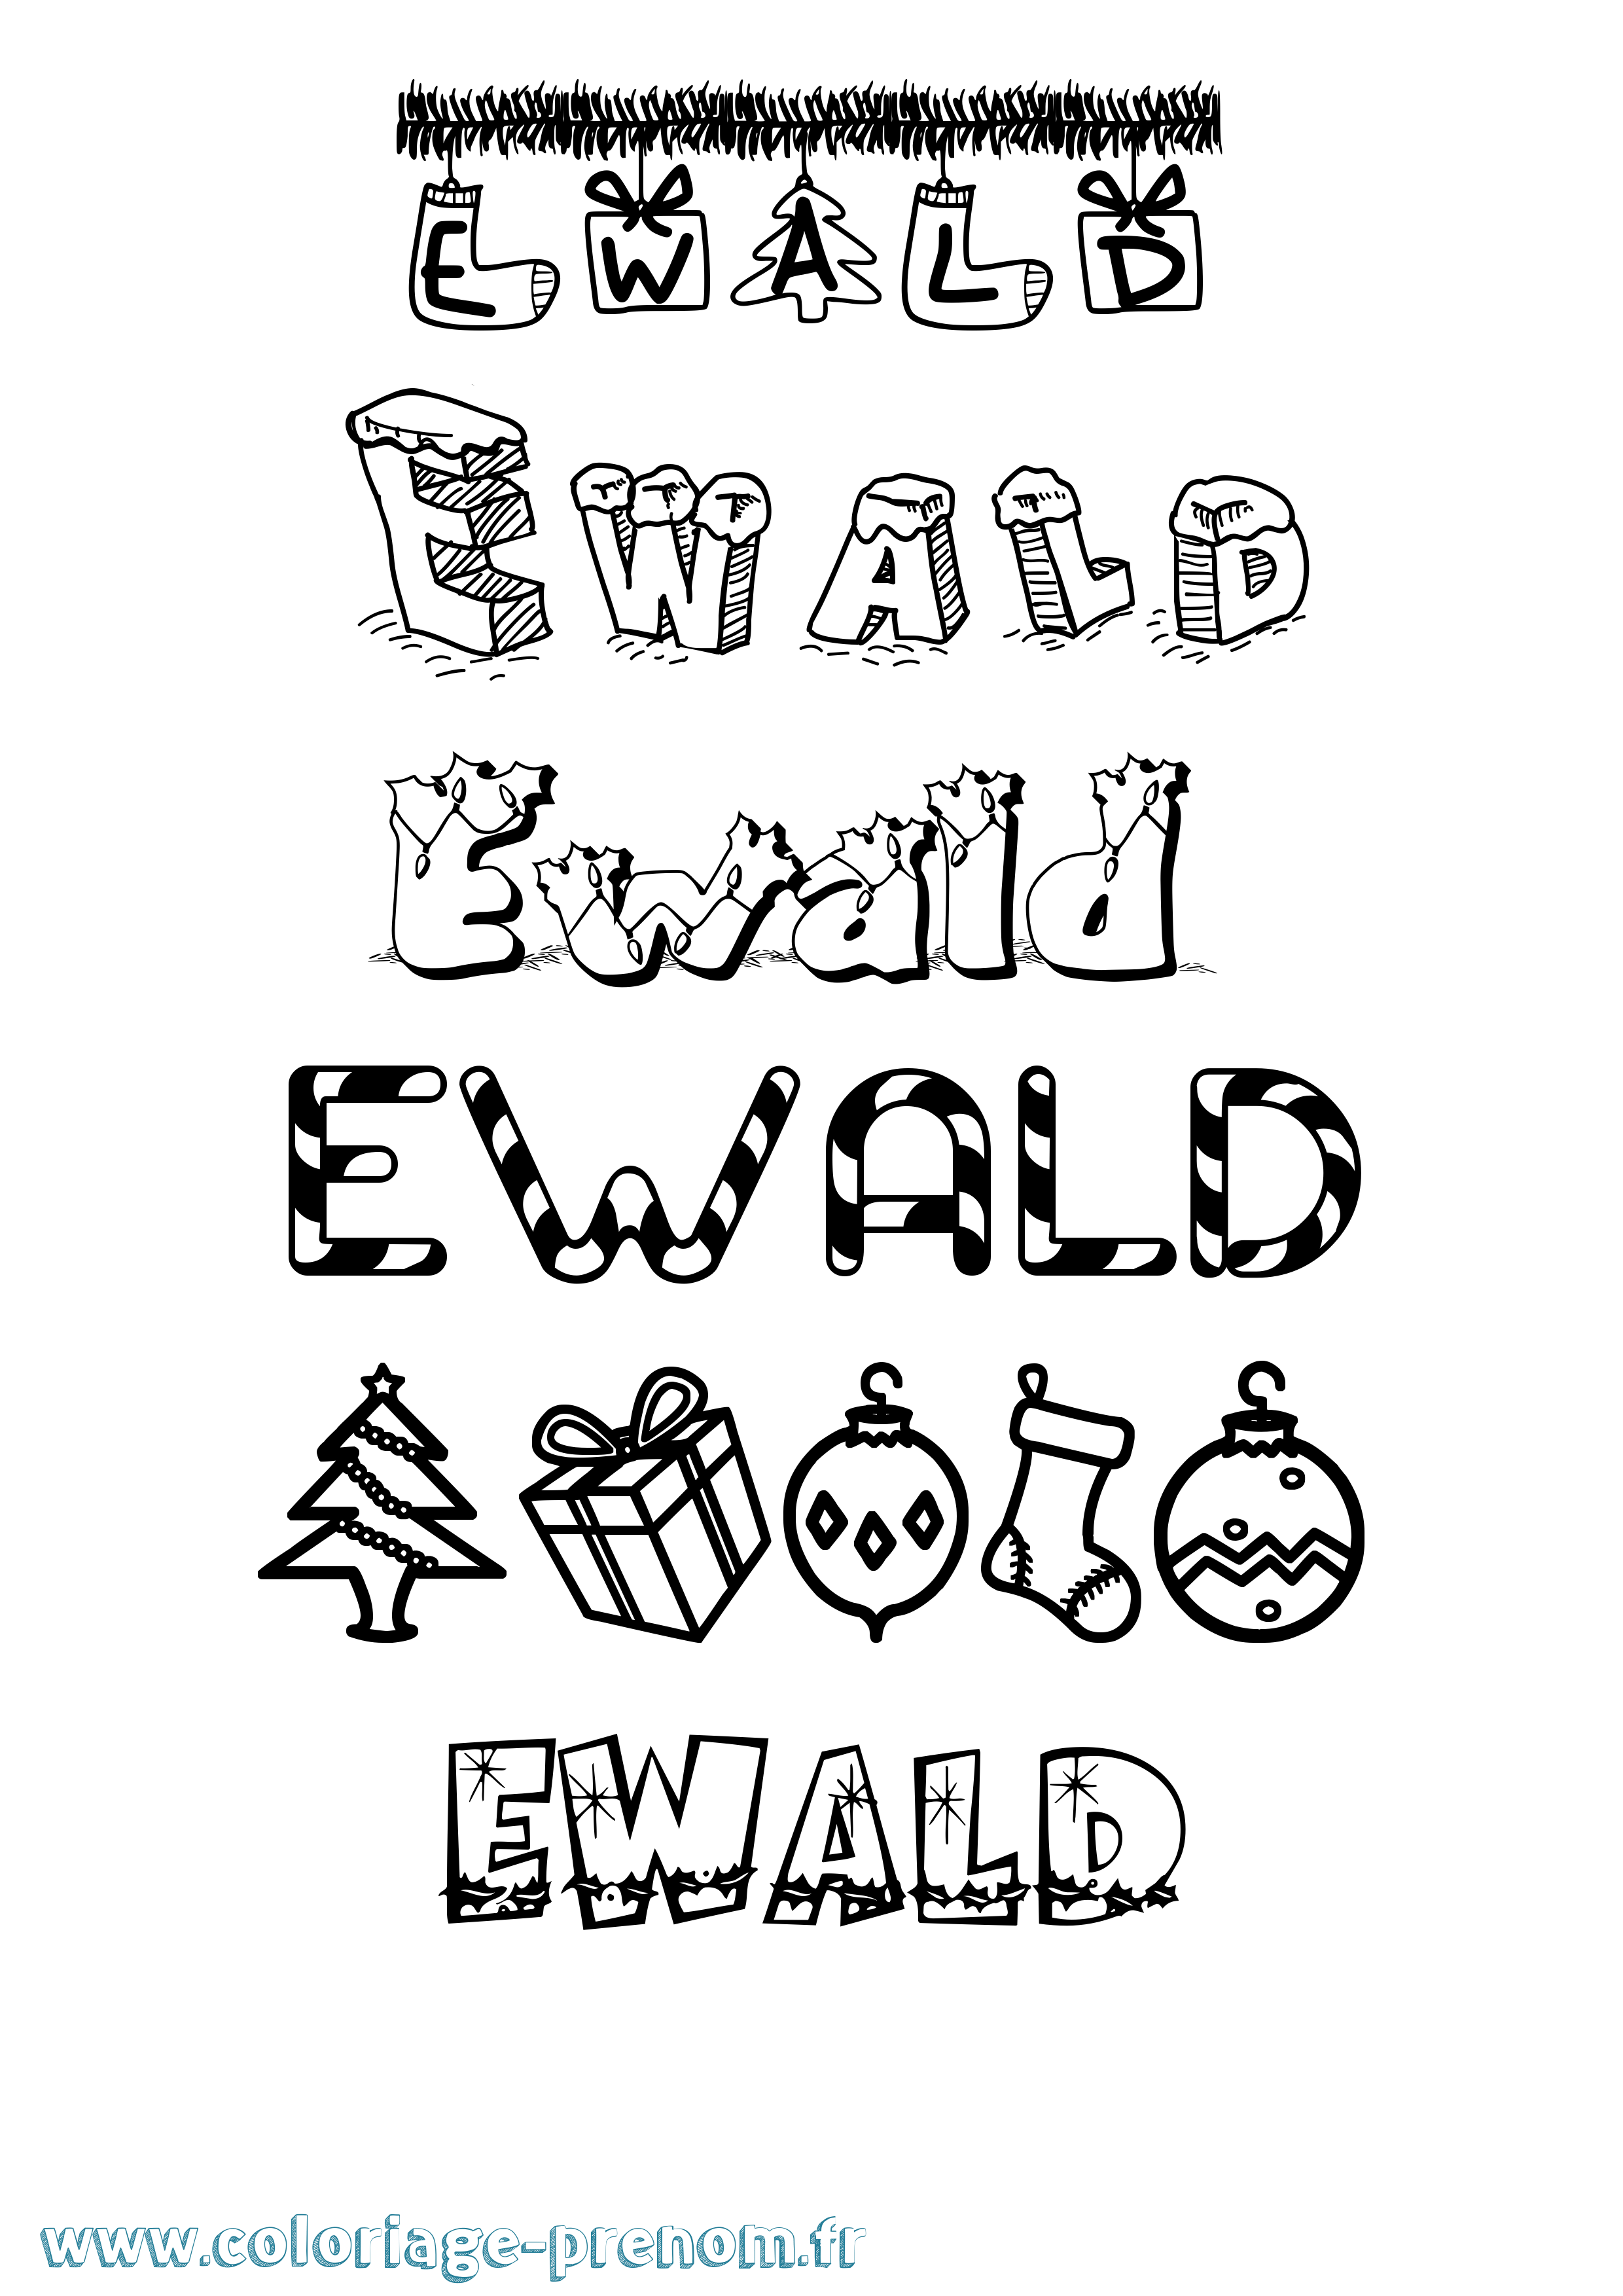 Coloriage prénom Ewald Noël